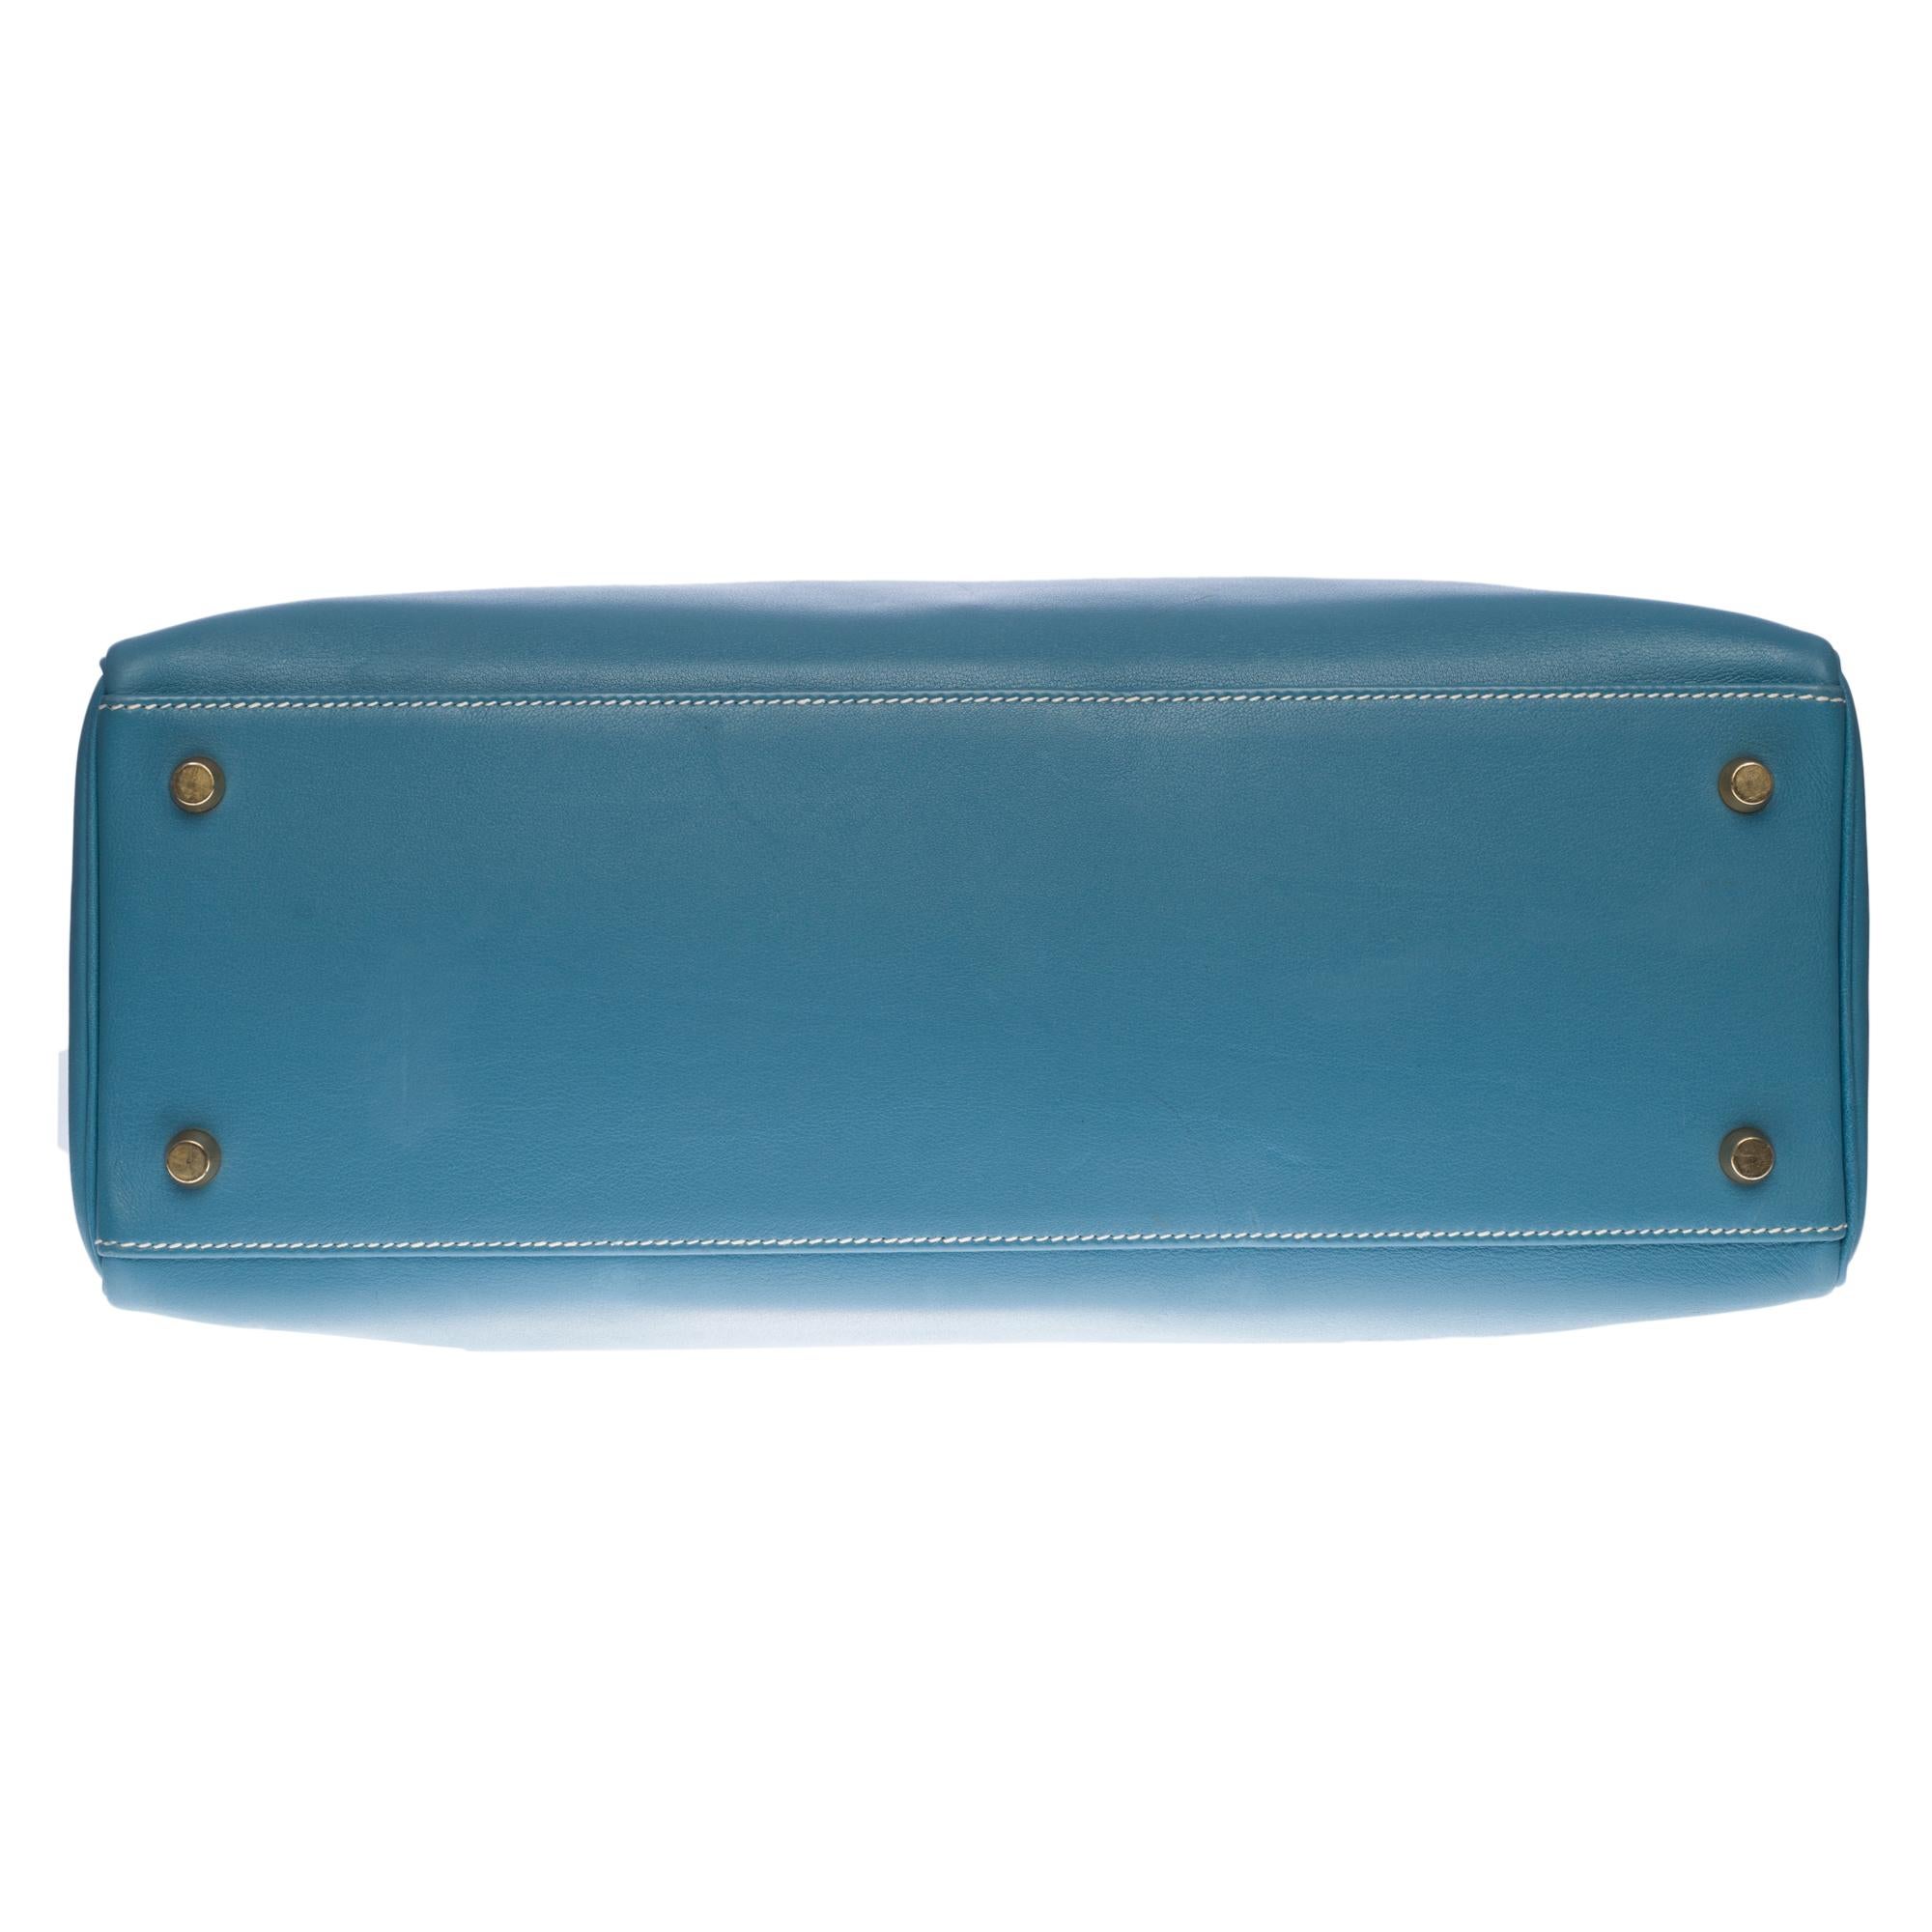 Gorgeous Hermès Kelly 35 retourné handbag strap in blue jeans Swift leather, GHW 1